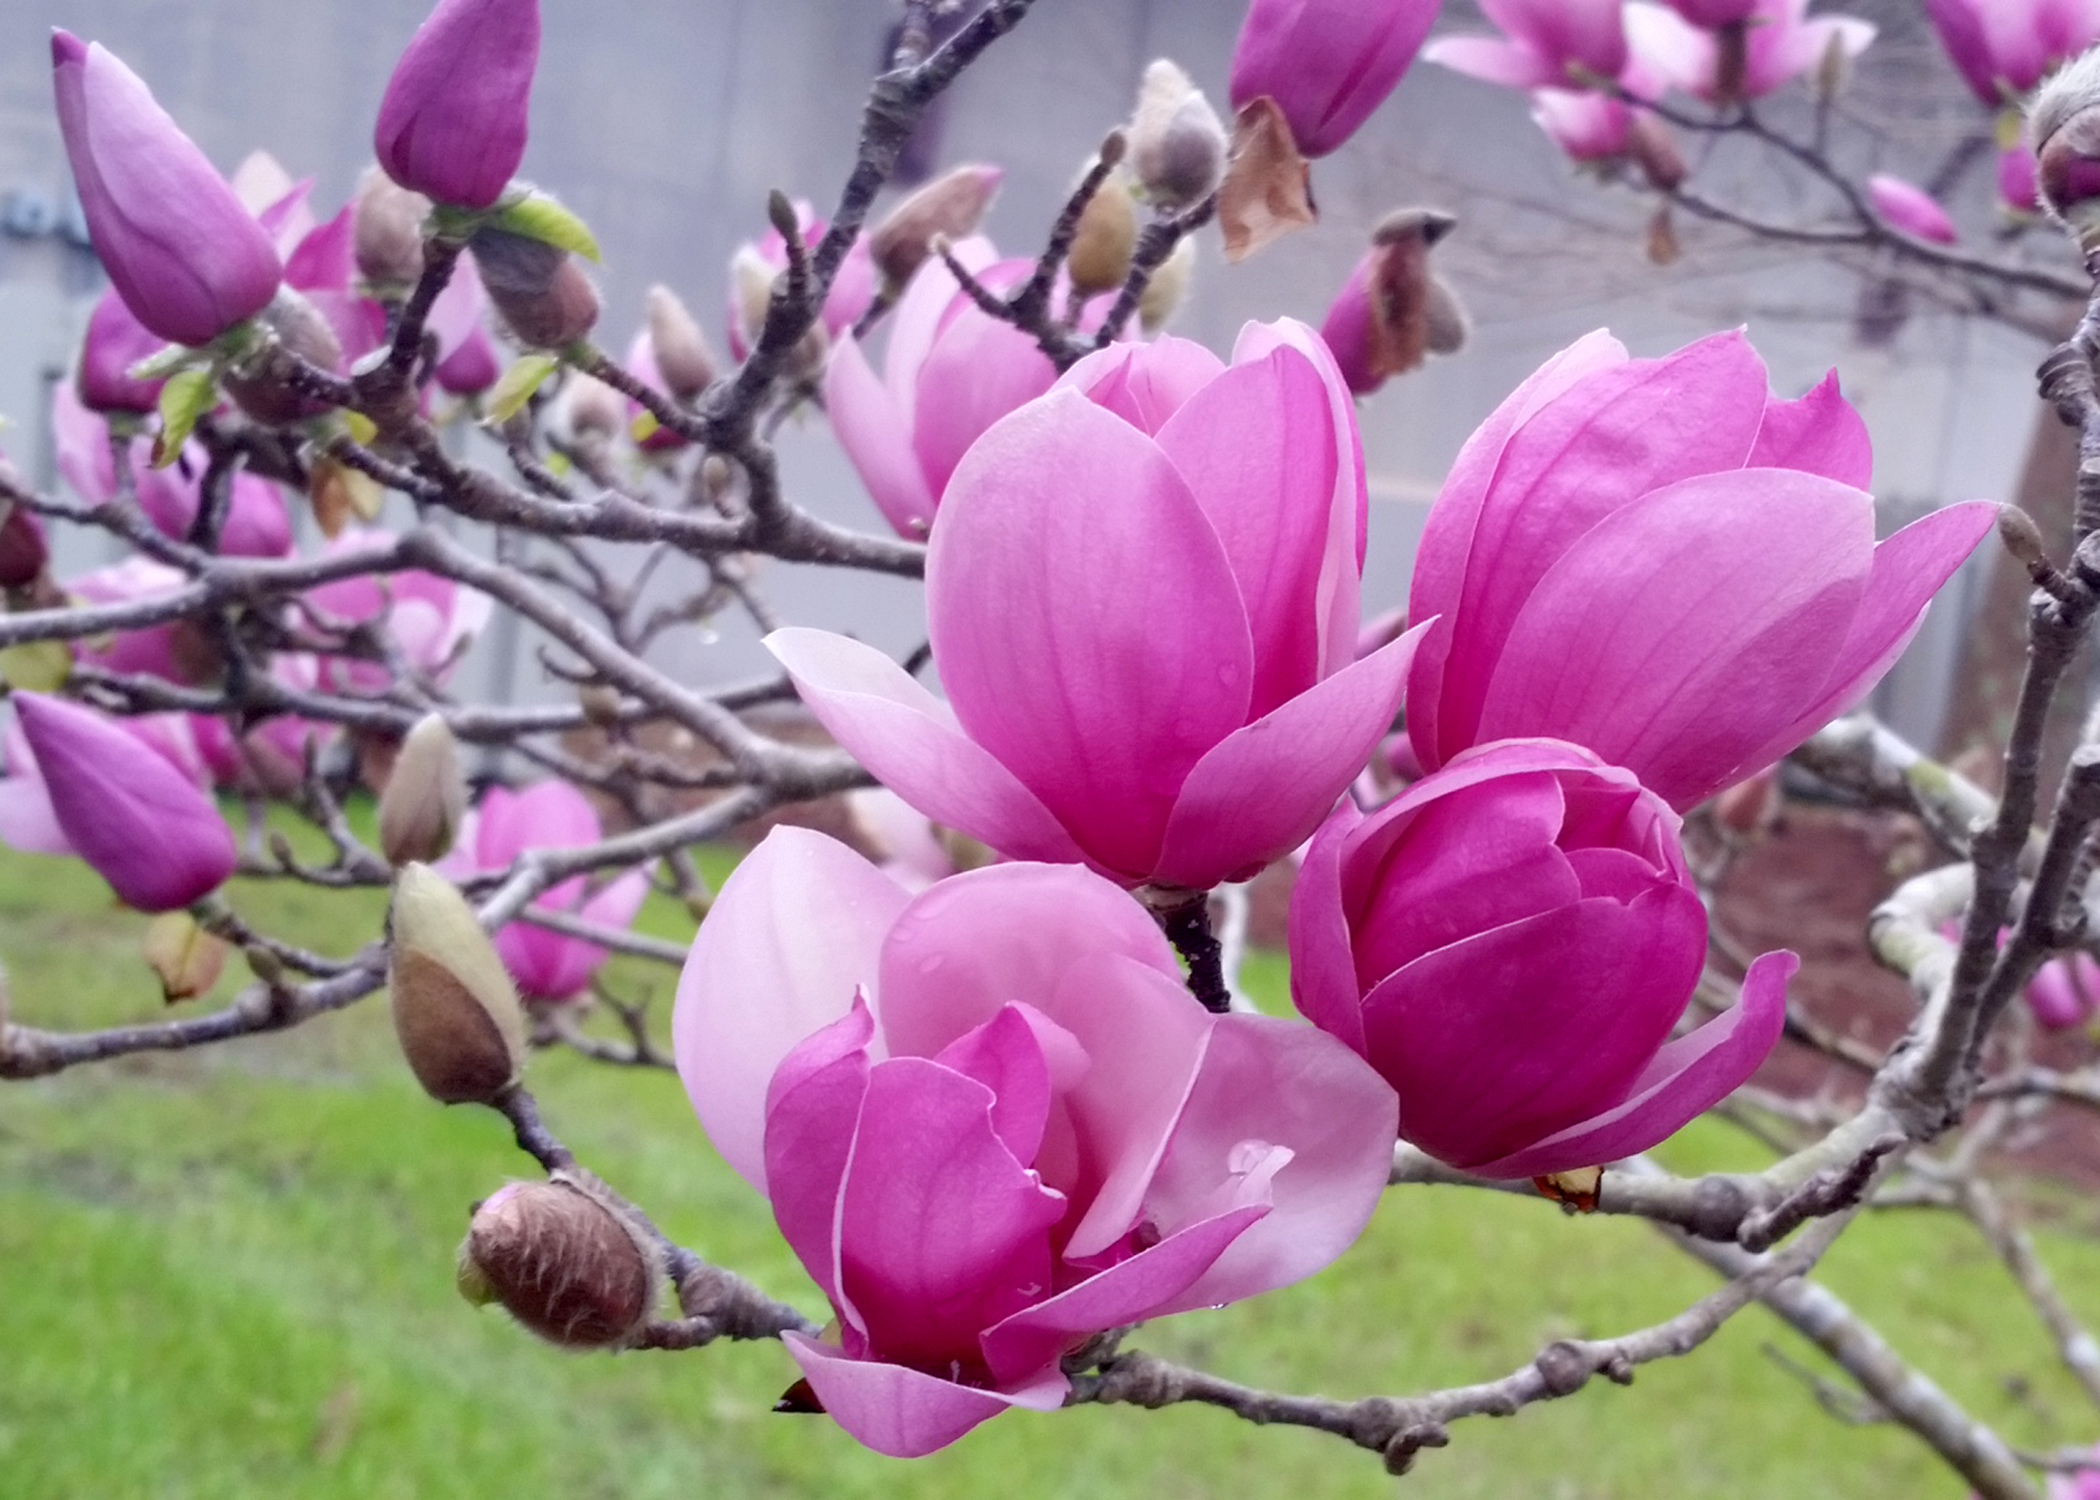 saucer magnolia blooms herald arrival of spring | mississippi